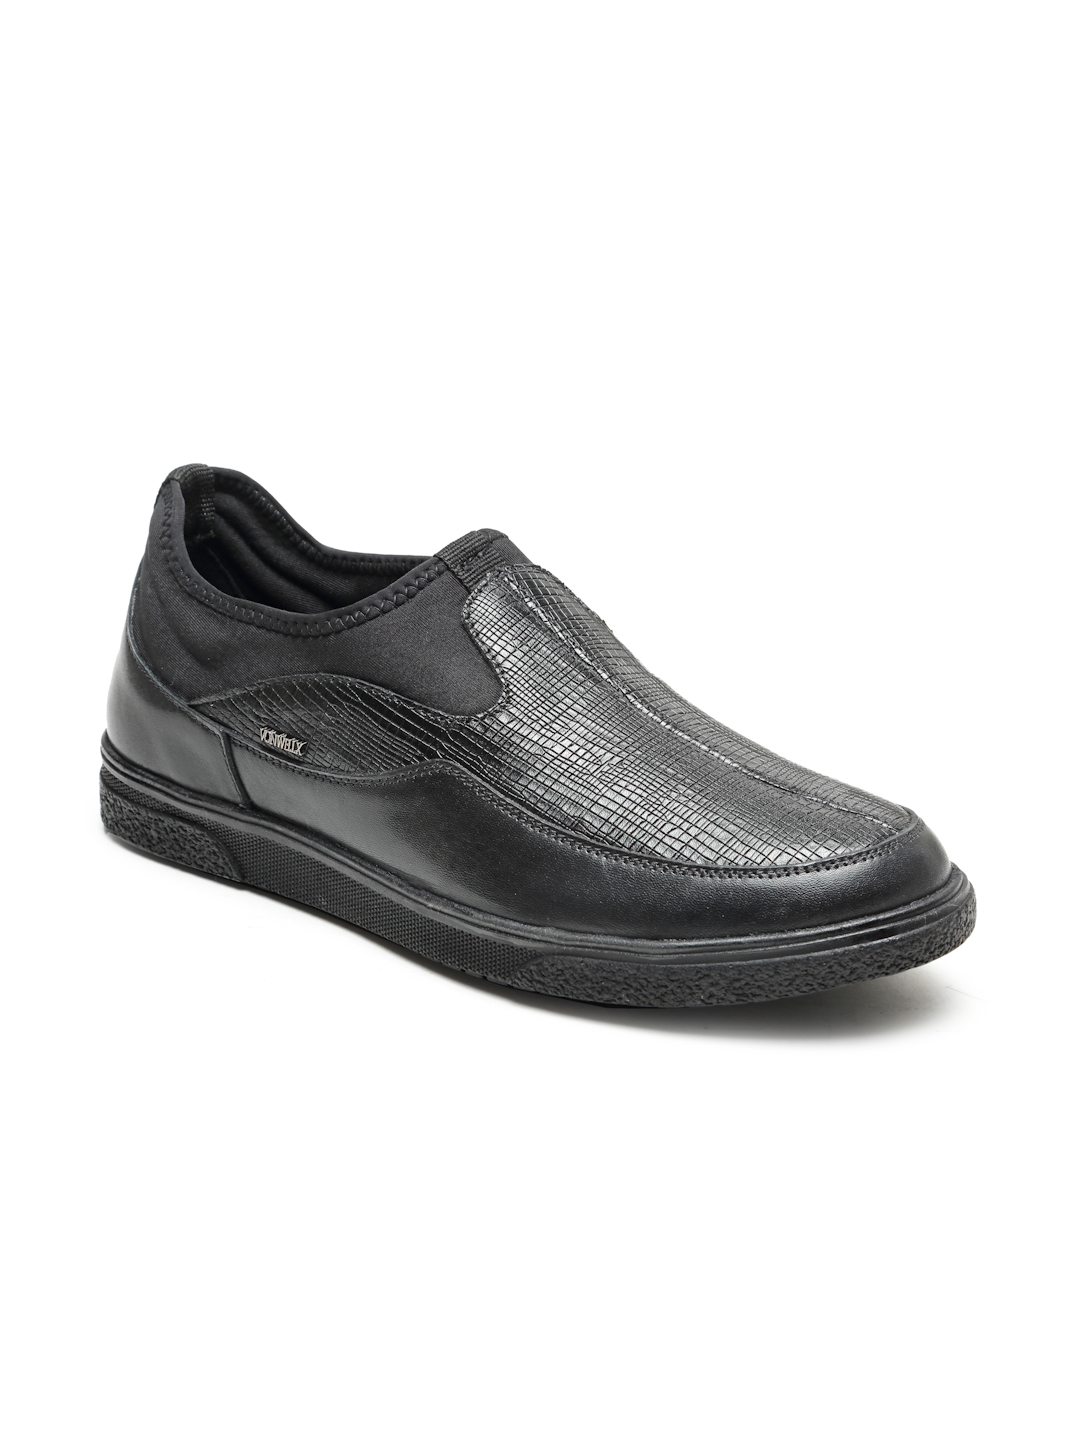 Buy Von Wellx Germany Comfort Men's Black Casual Loafers Everett Online in Gurgaon